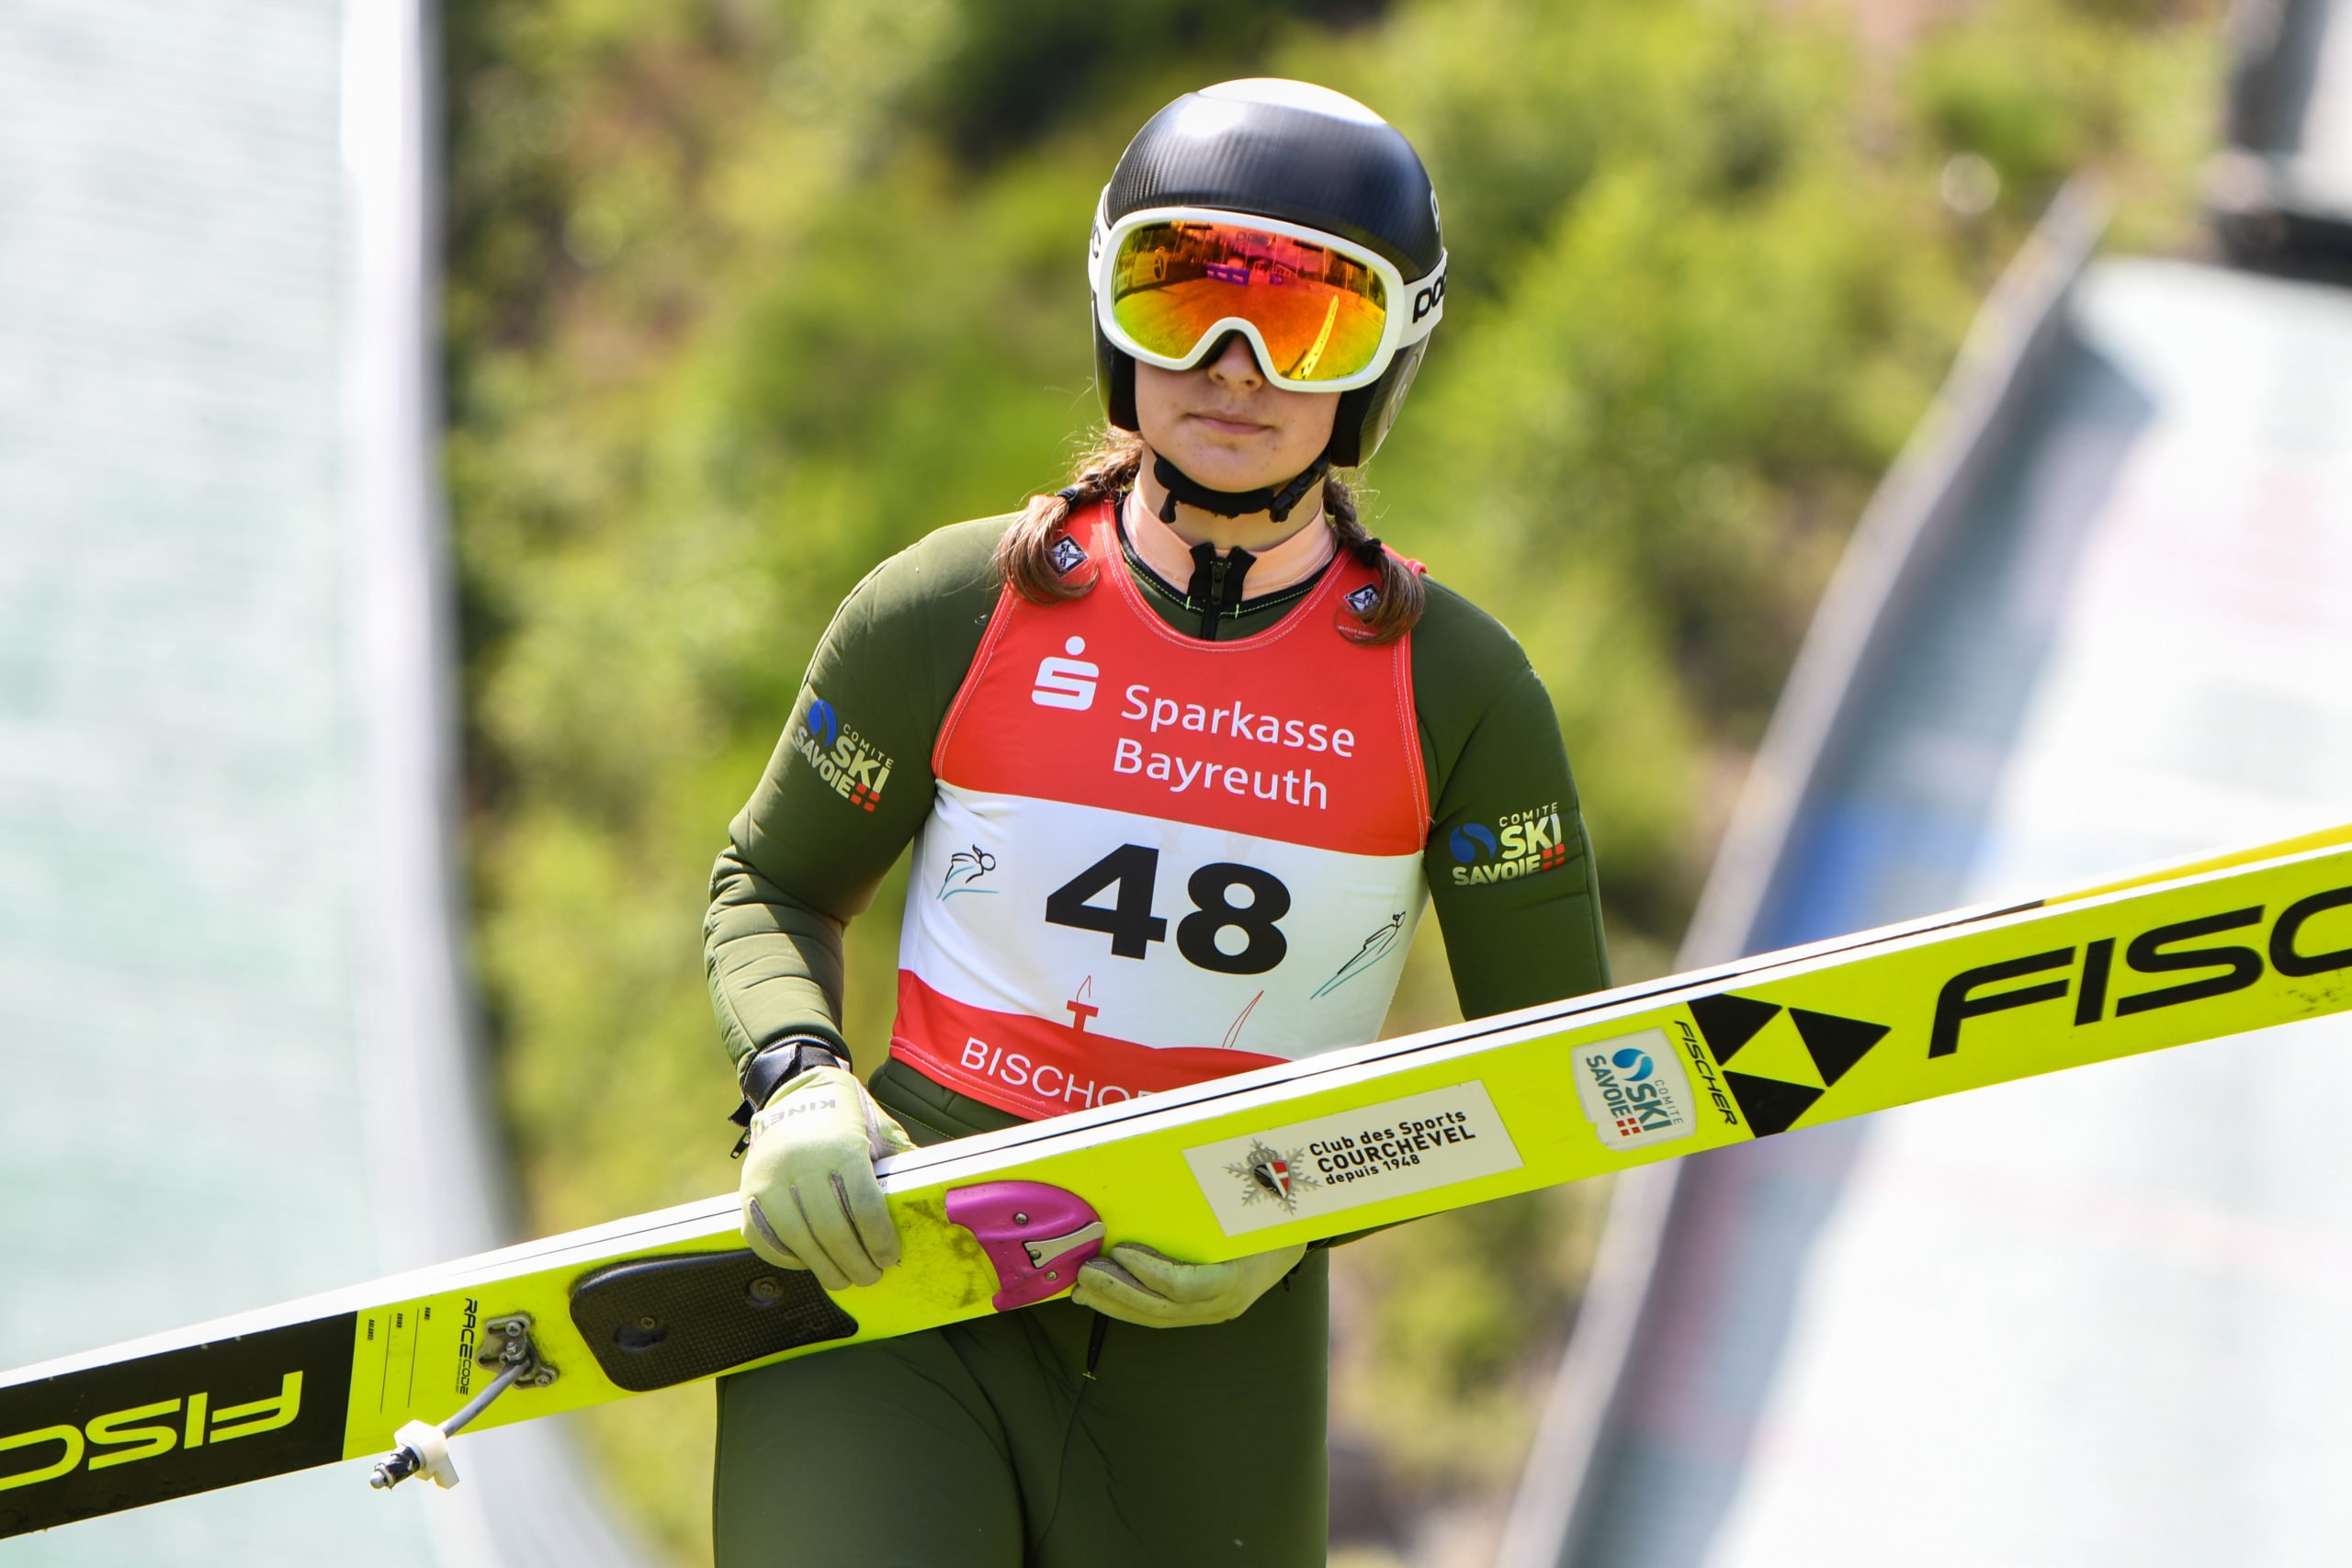 Lilou Zepchi, saut à ski, Bischofsgrün, Nordic Mag, nordicmag